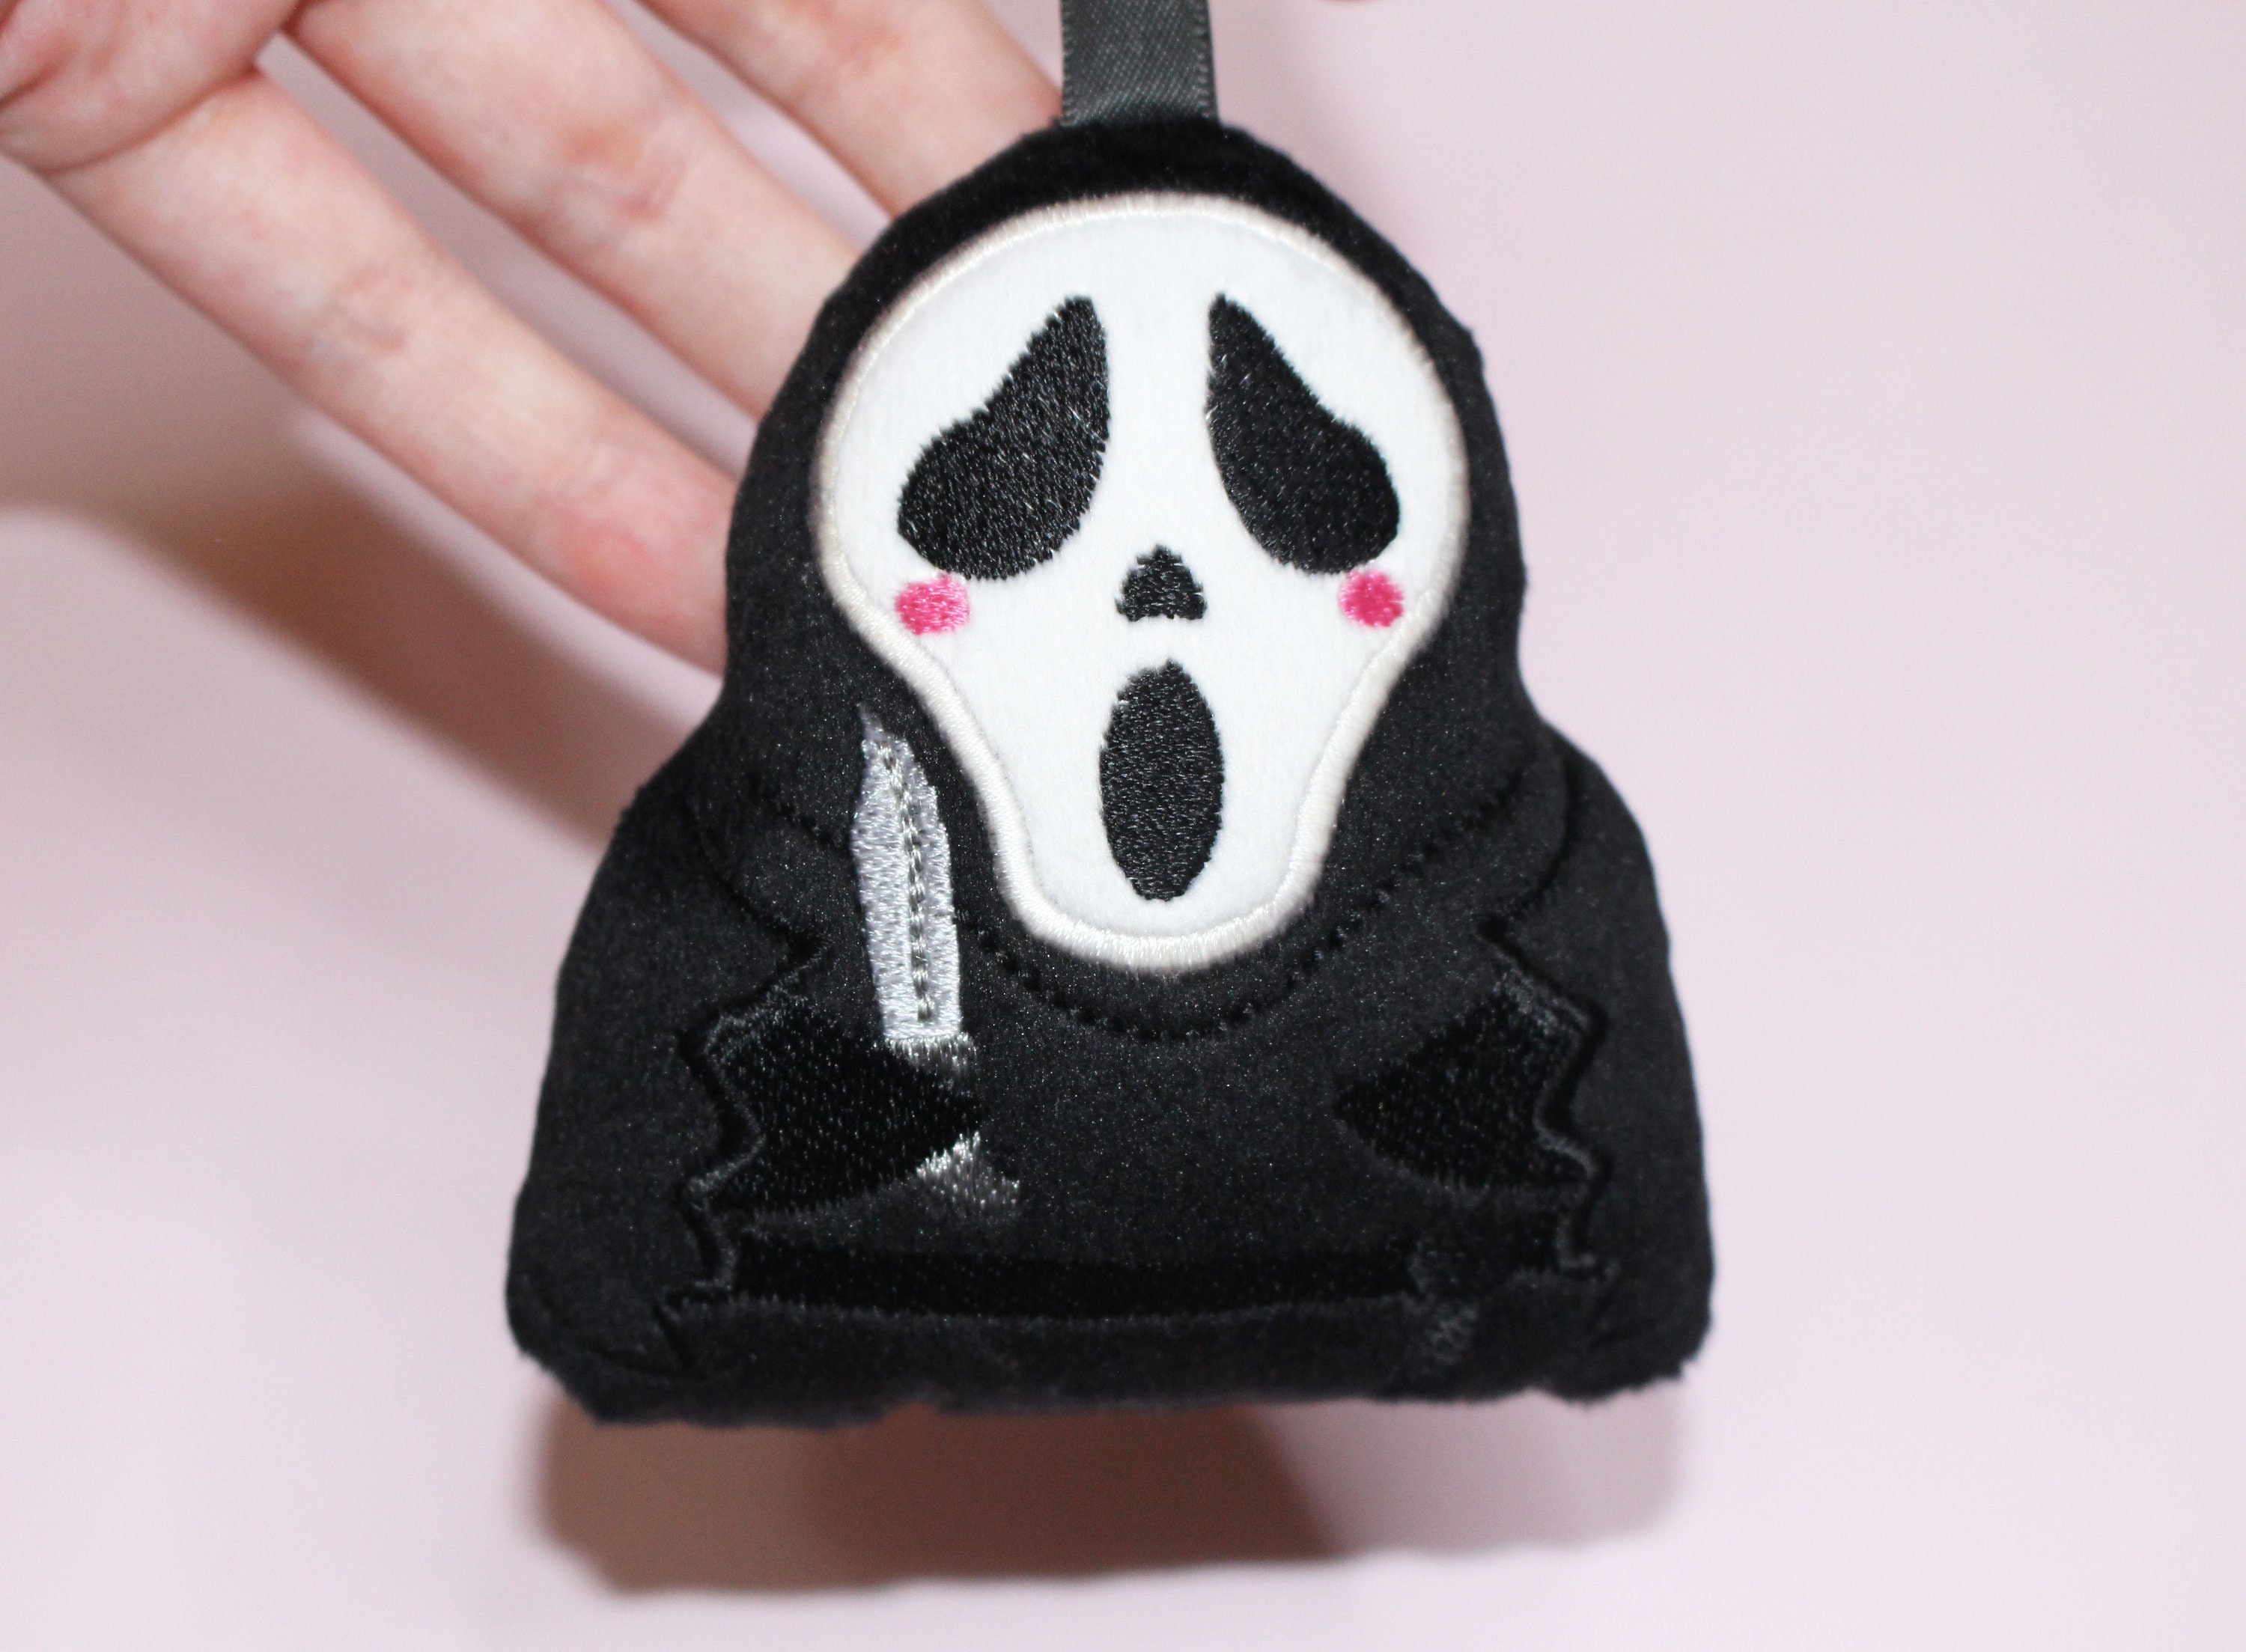 Mini Ghostface Plush Toy 